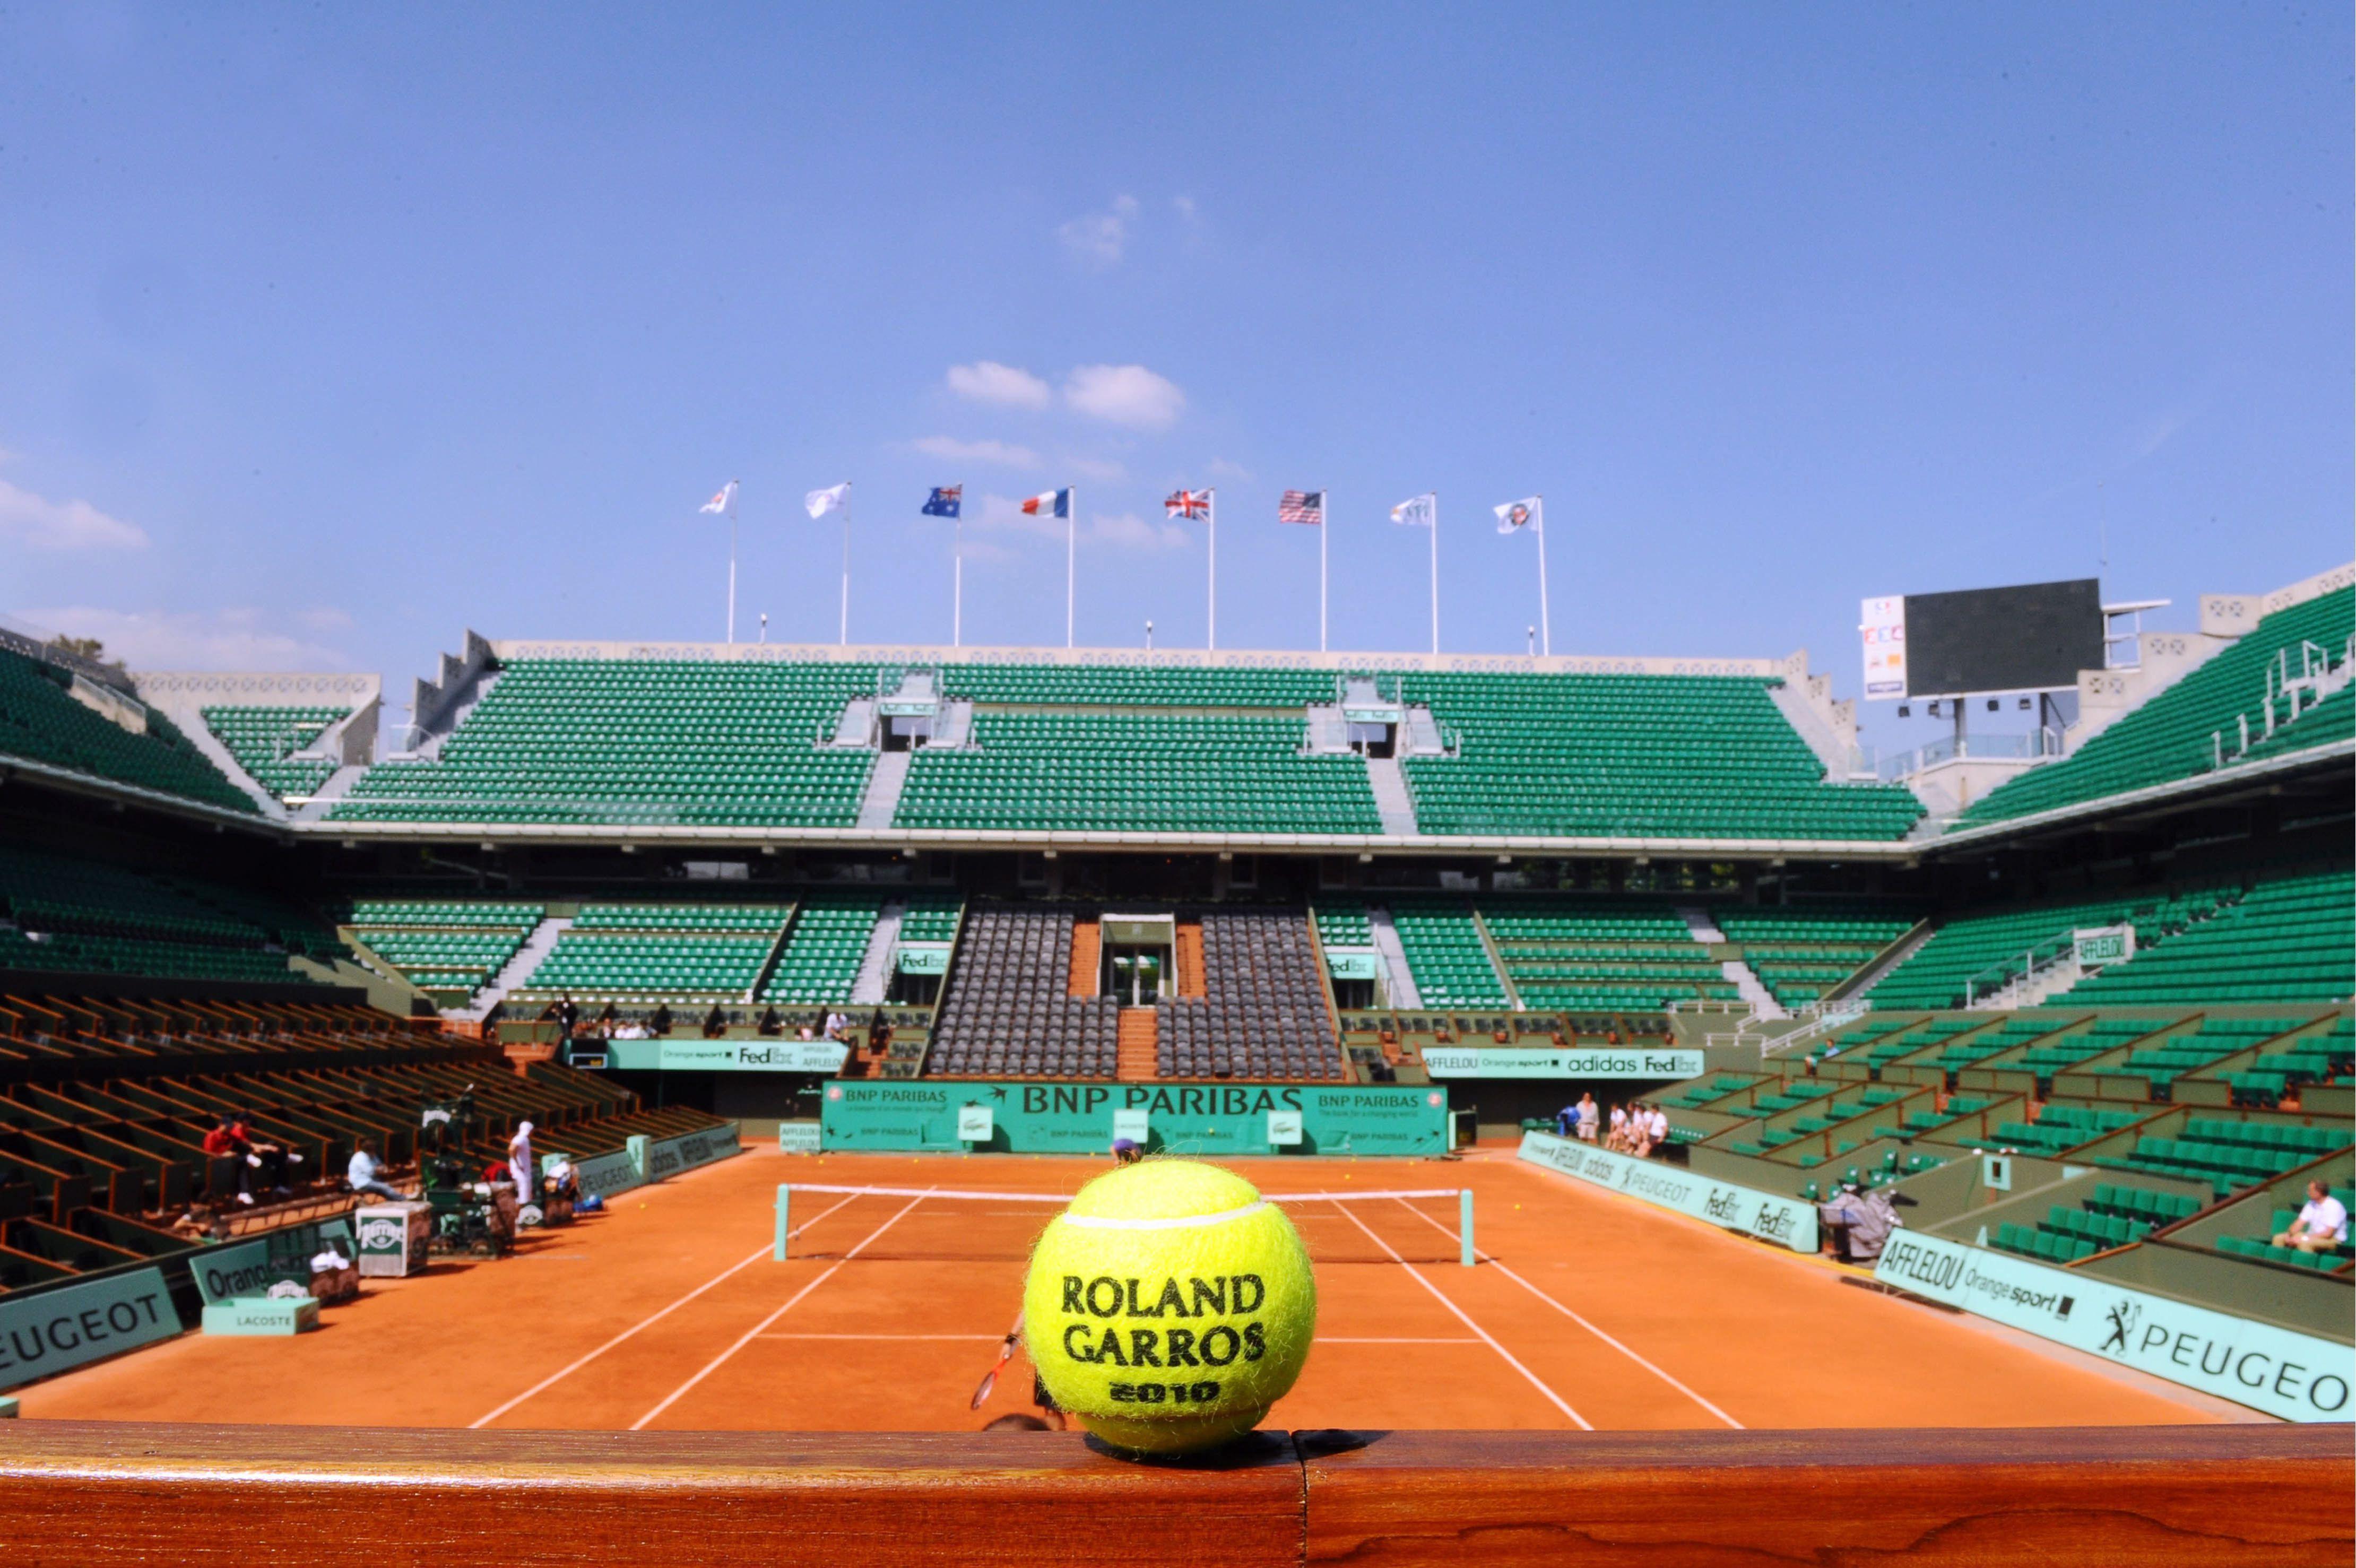 49+ French Open Roland Garros Logo Images Free Backround